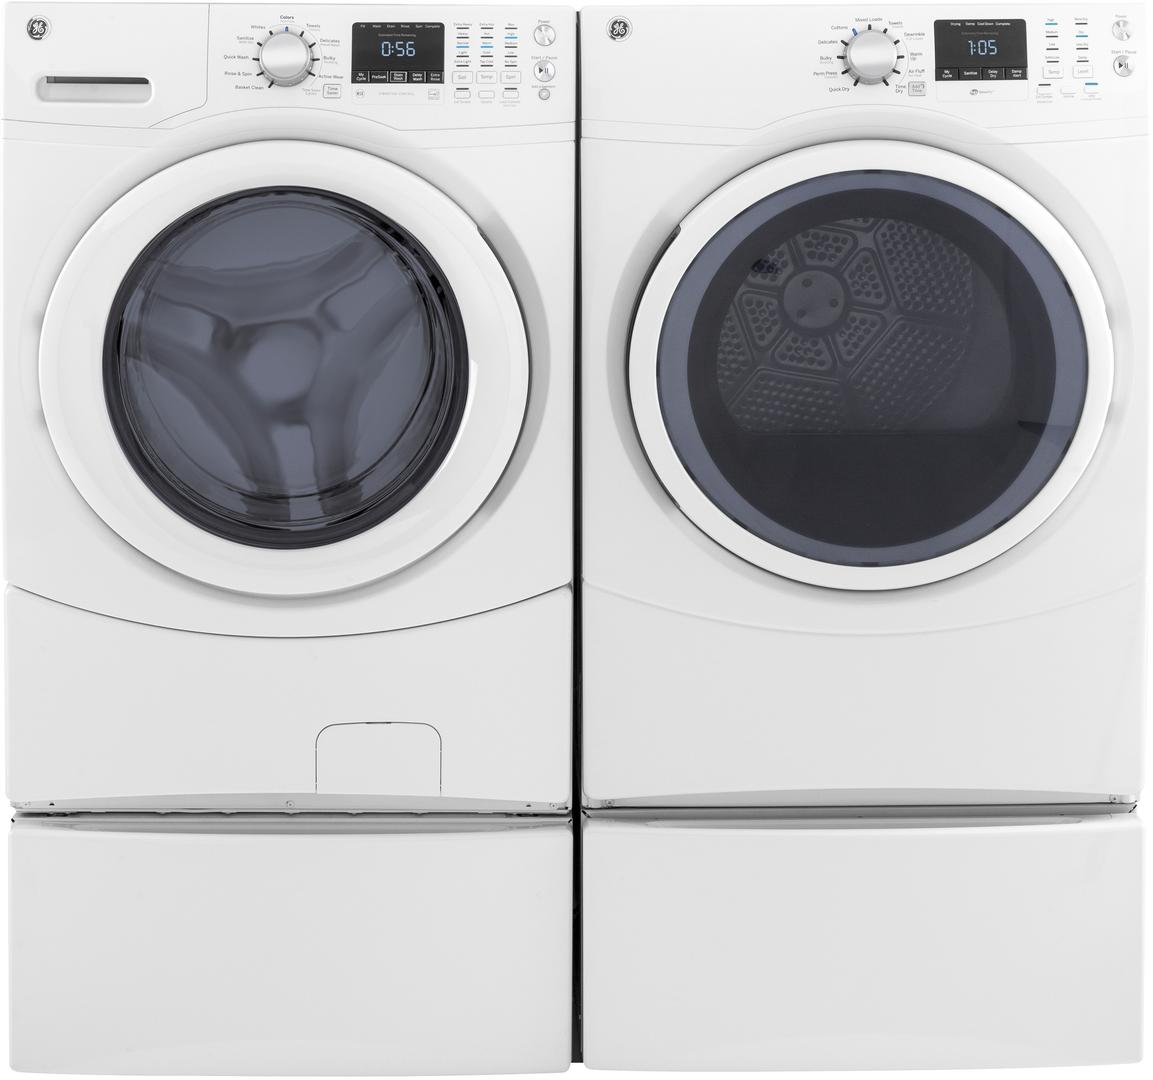 ADA Compliant Washer & Dryer